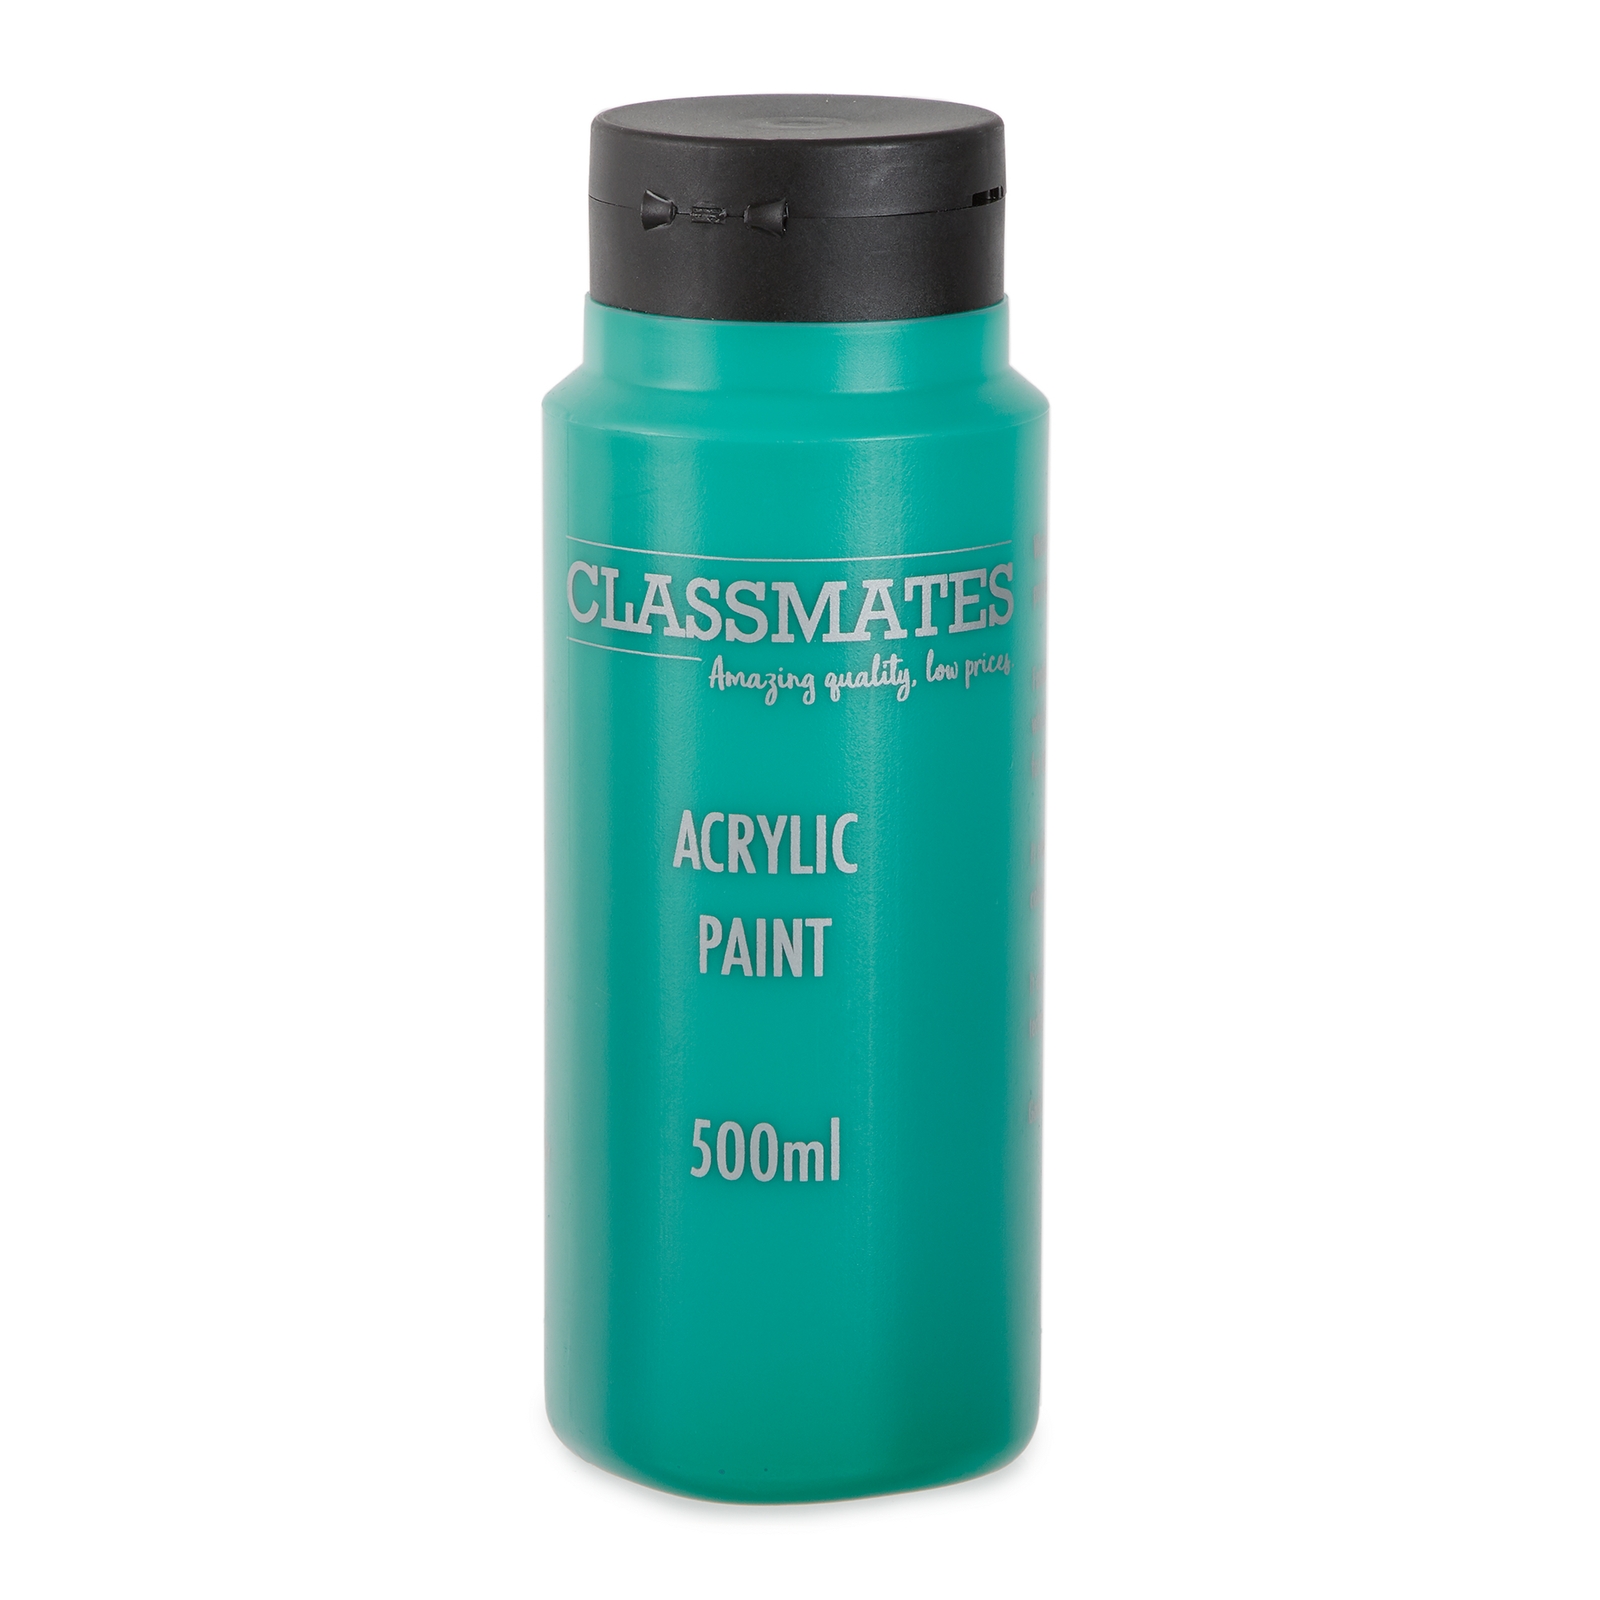 Classmates Acrylic Paint in Mid Green - 500ml Bottle